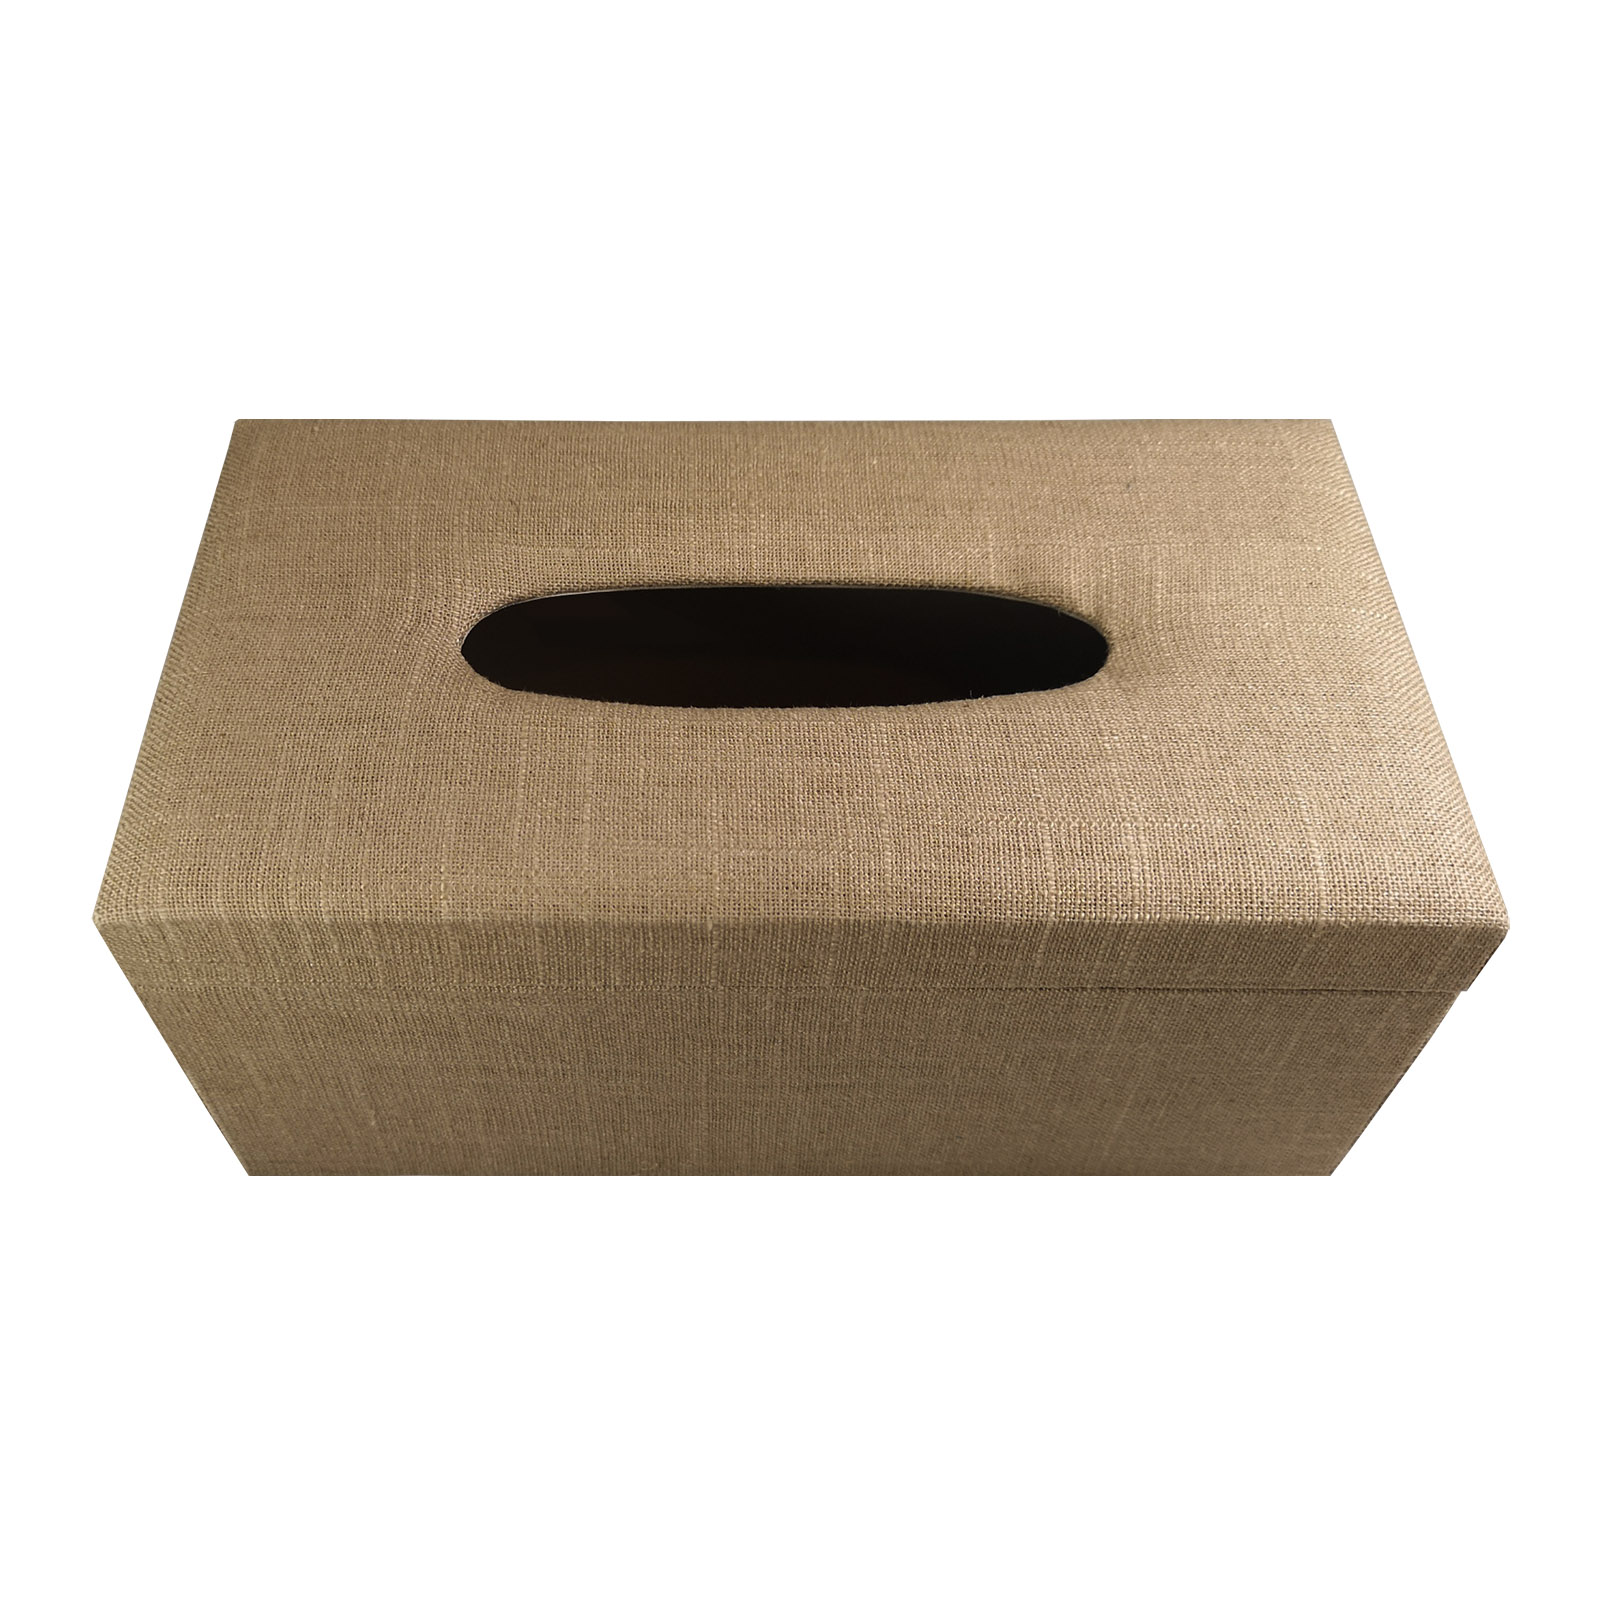 Brown hemp tissue box